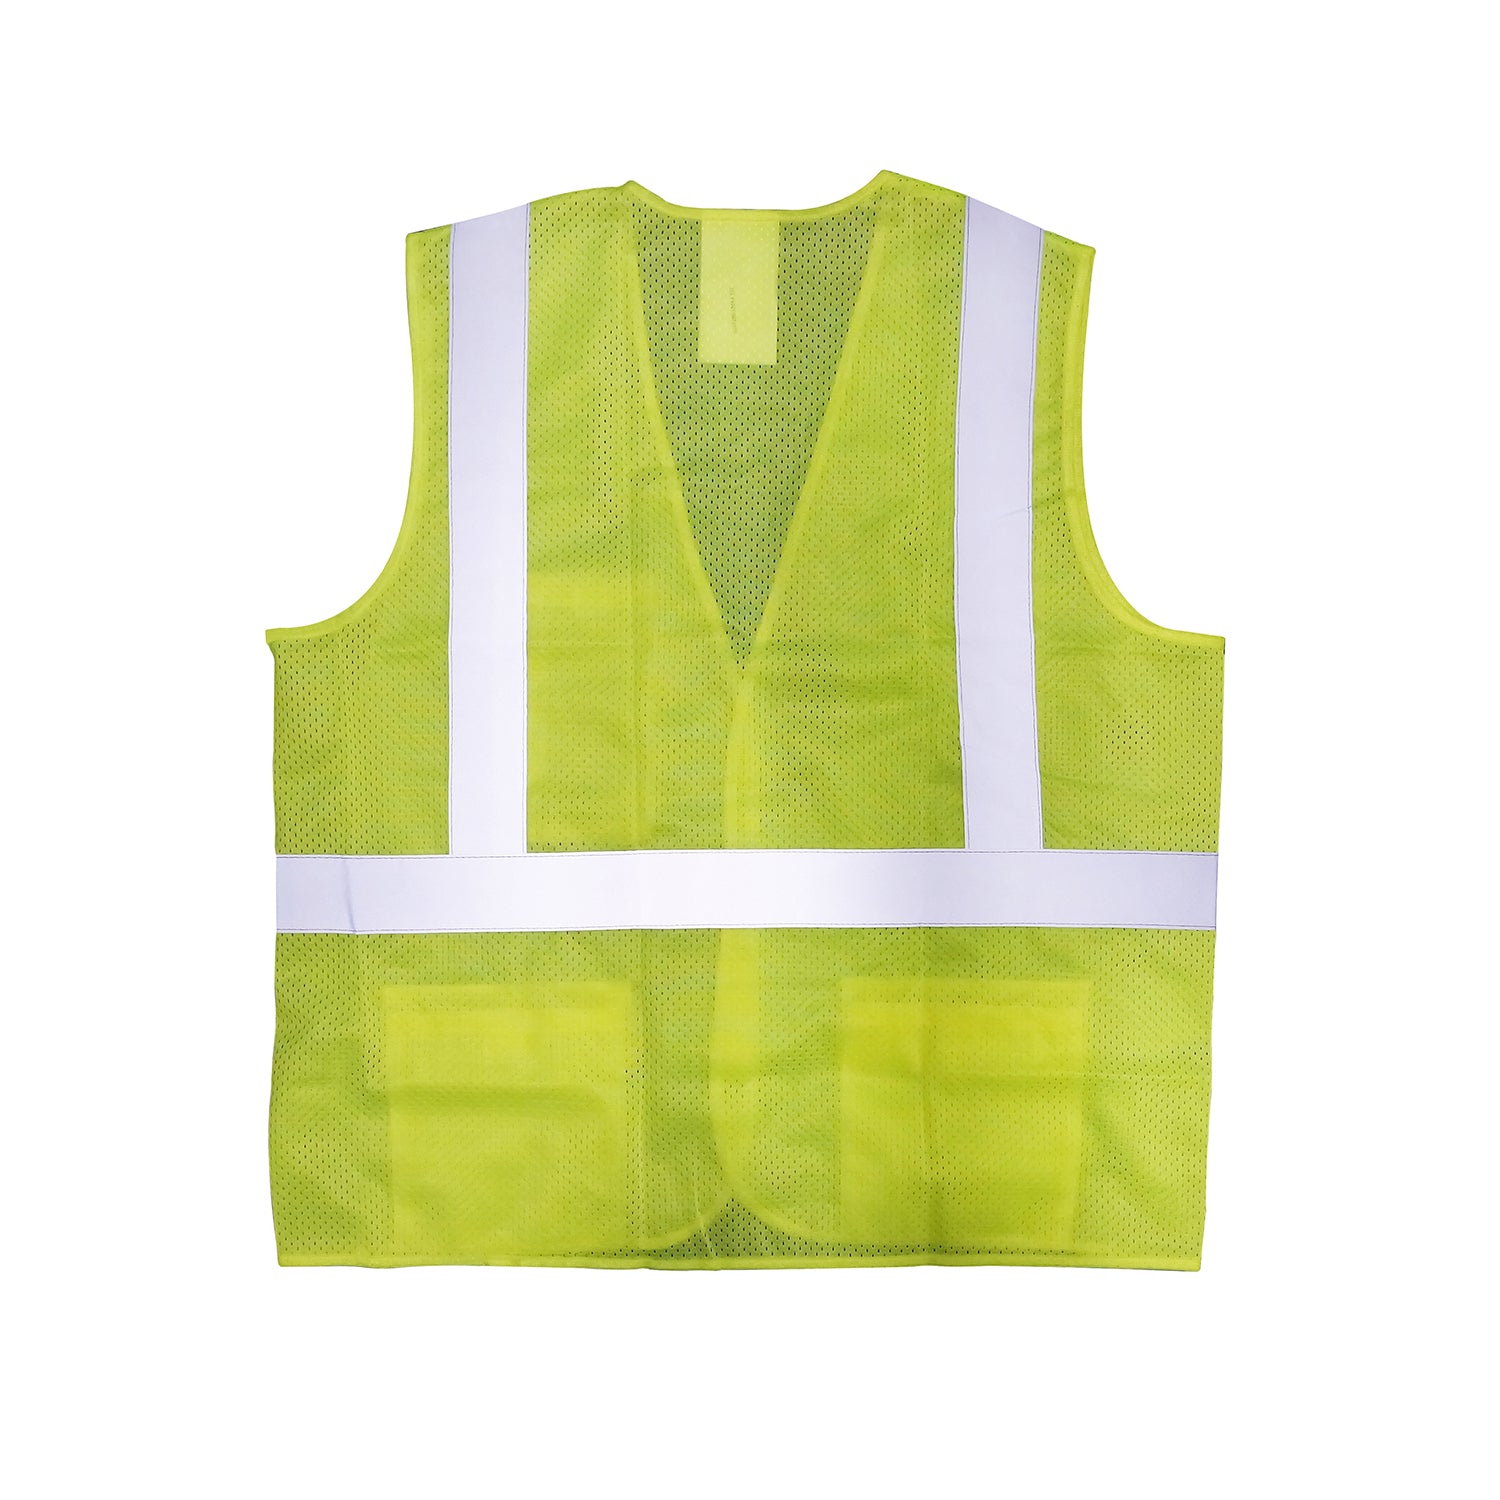 Ironwear Surveyor Safety Vest, ANSI Class 2 - Lime Mesh -Safety- eGPS Solutions Inc.